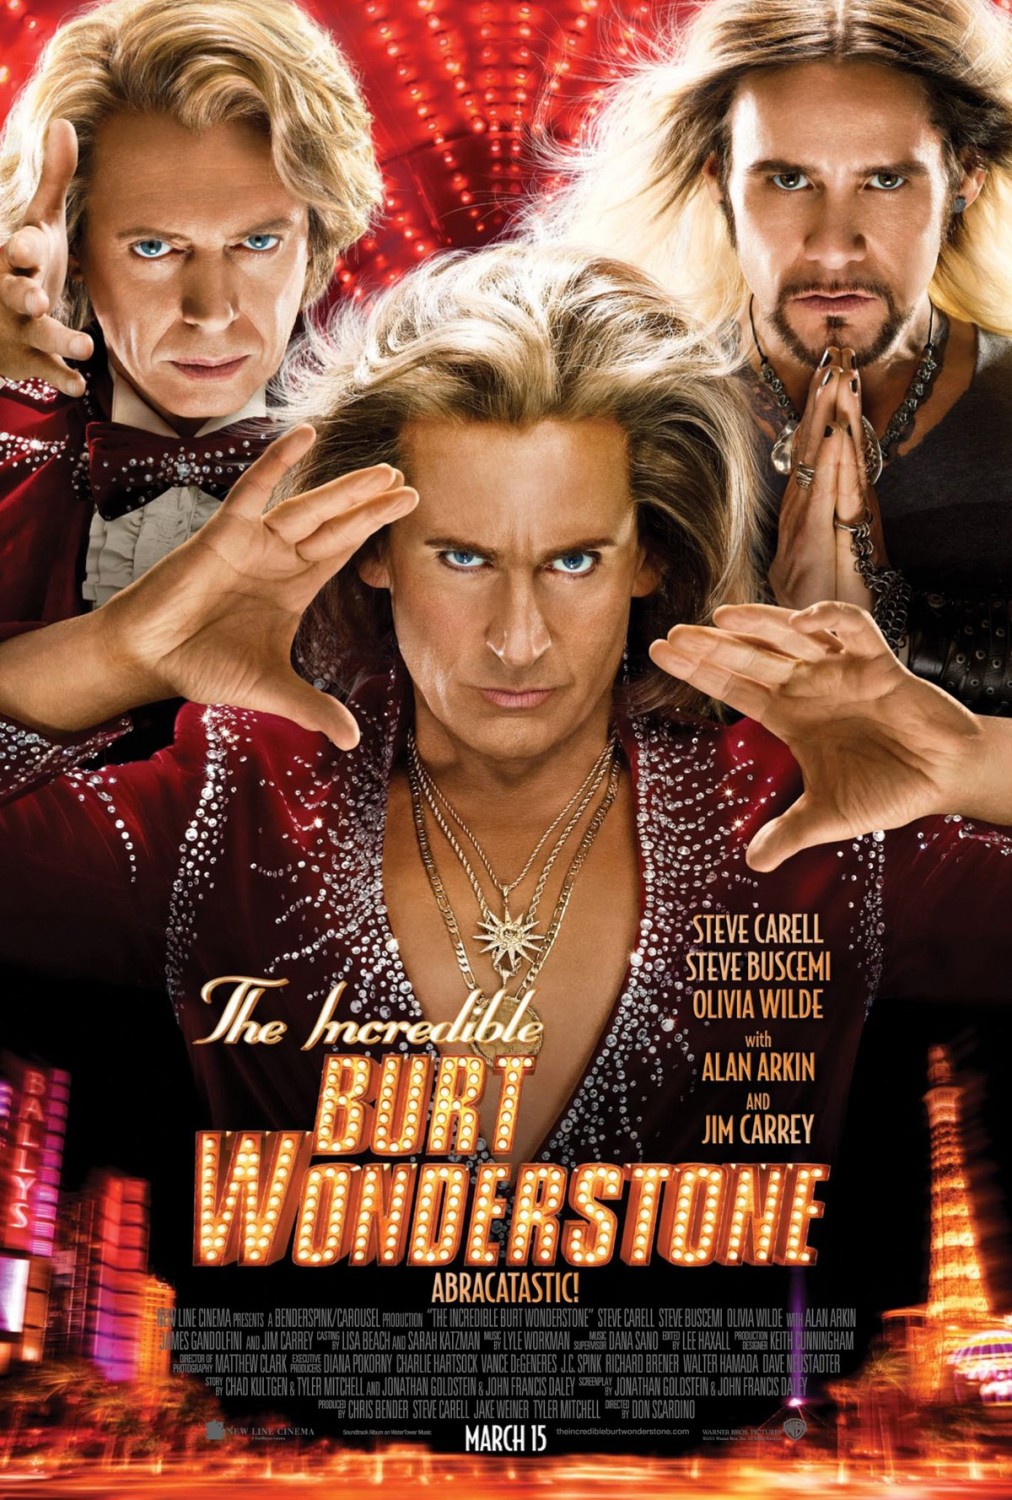 The-Incredible-Burt-Wonderstone-Movie-Poster.jpg